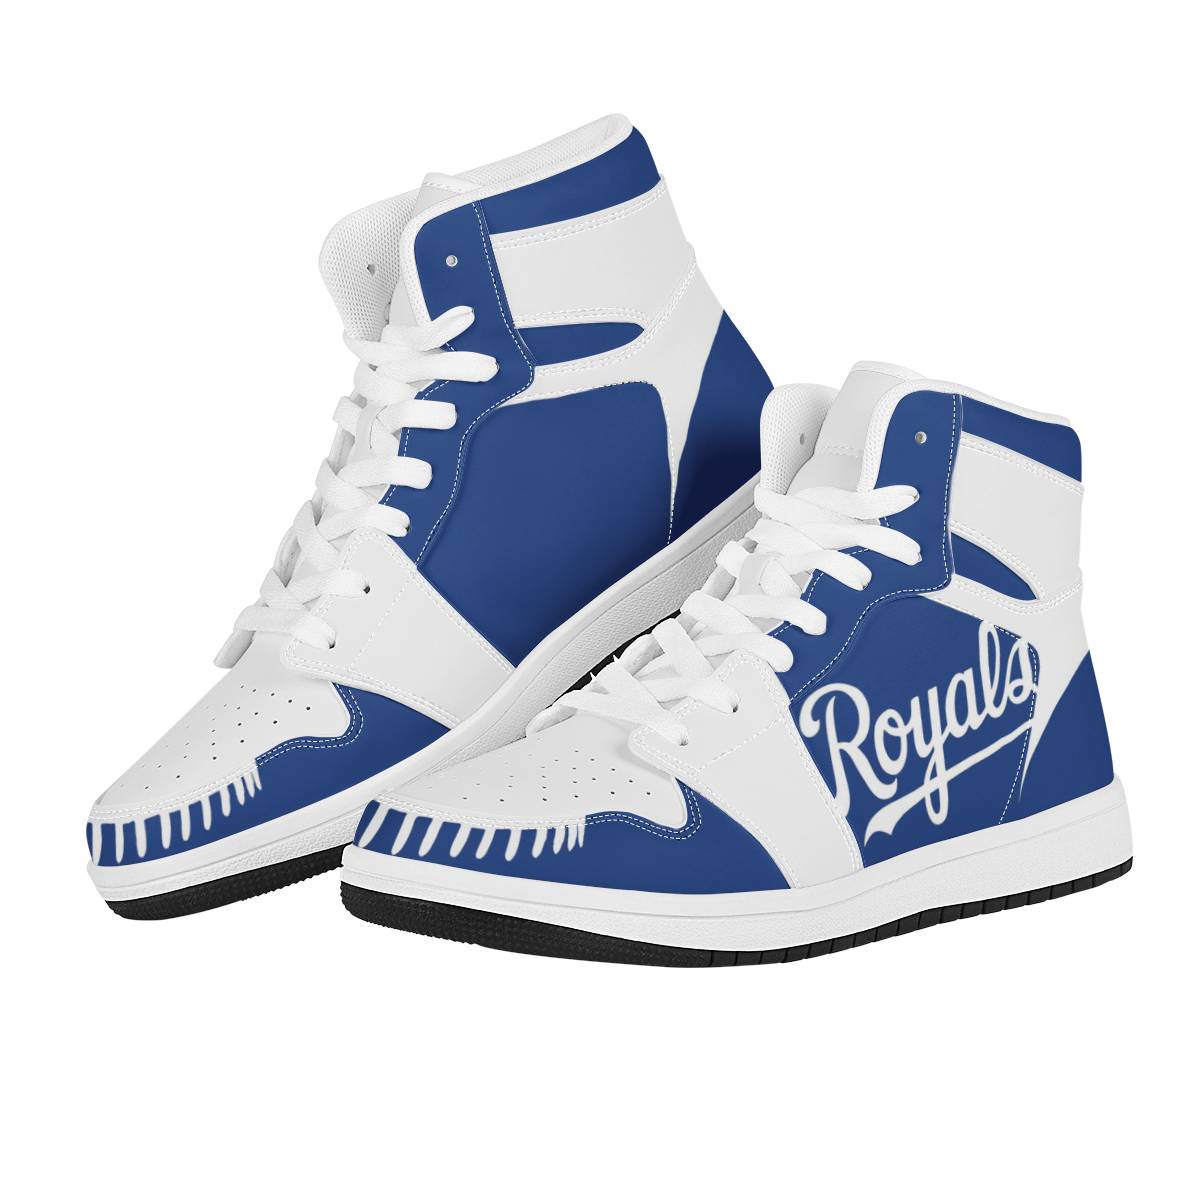 Men's Kansas City Royals High Top Leather AJ1 Sneakers 001